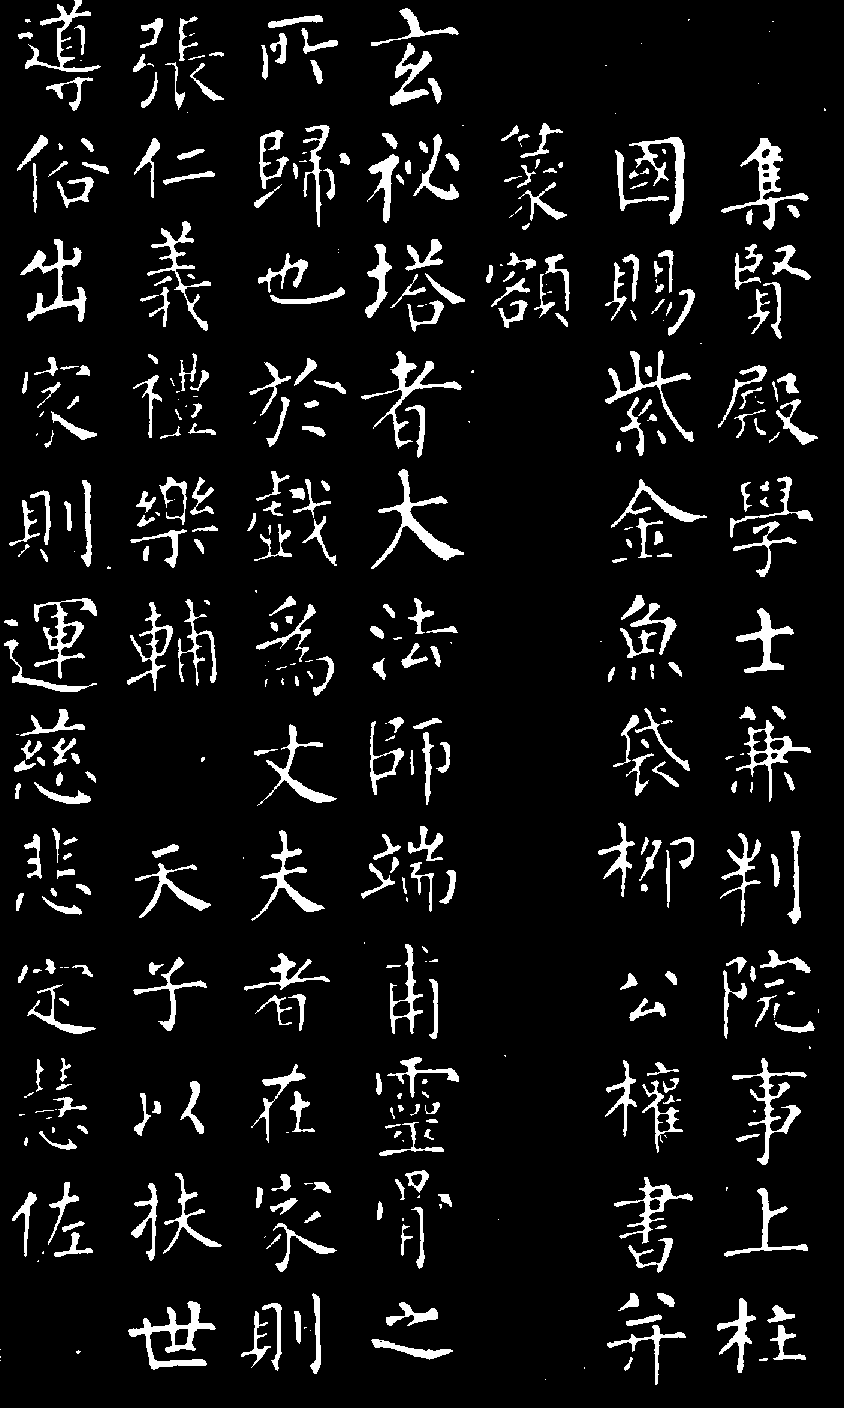 Cool Chinese Symbol Wallpaper .wallpaperaccess.com